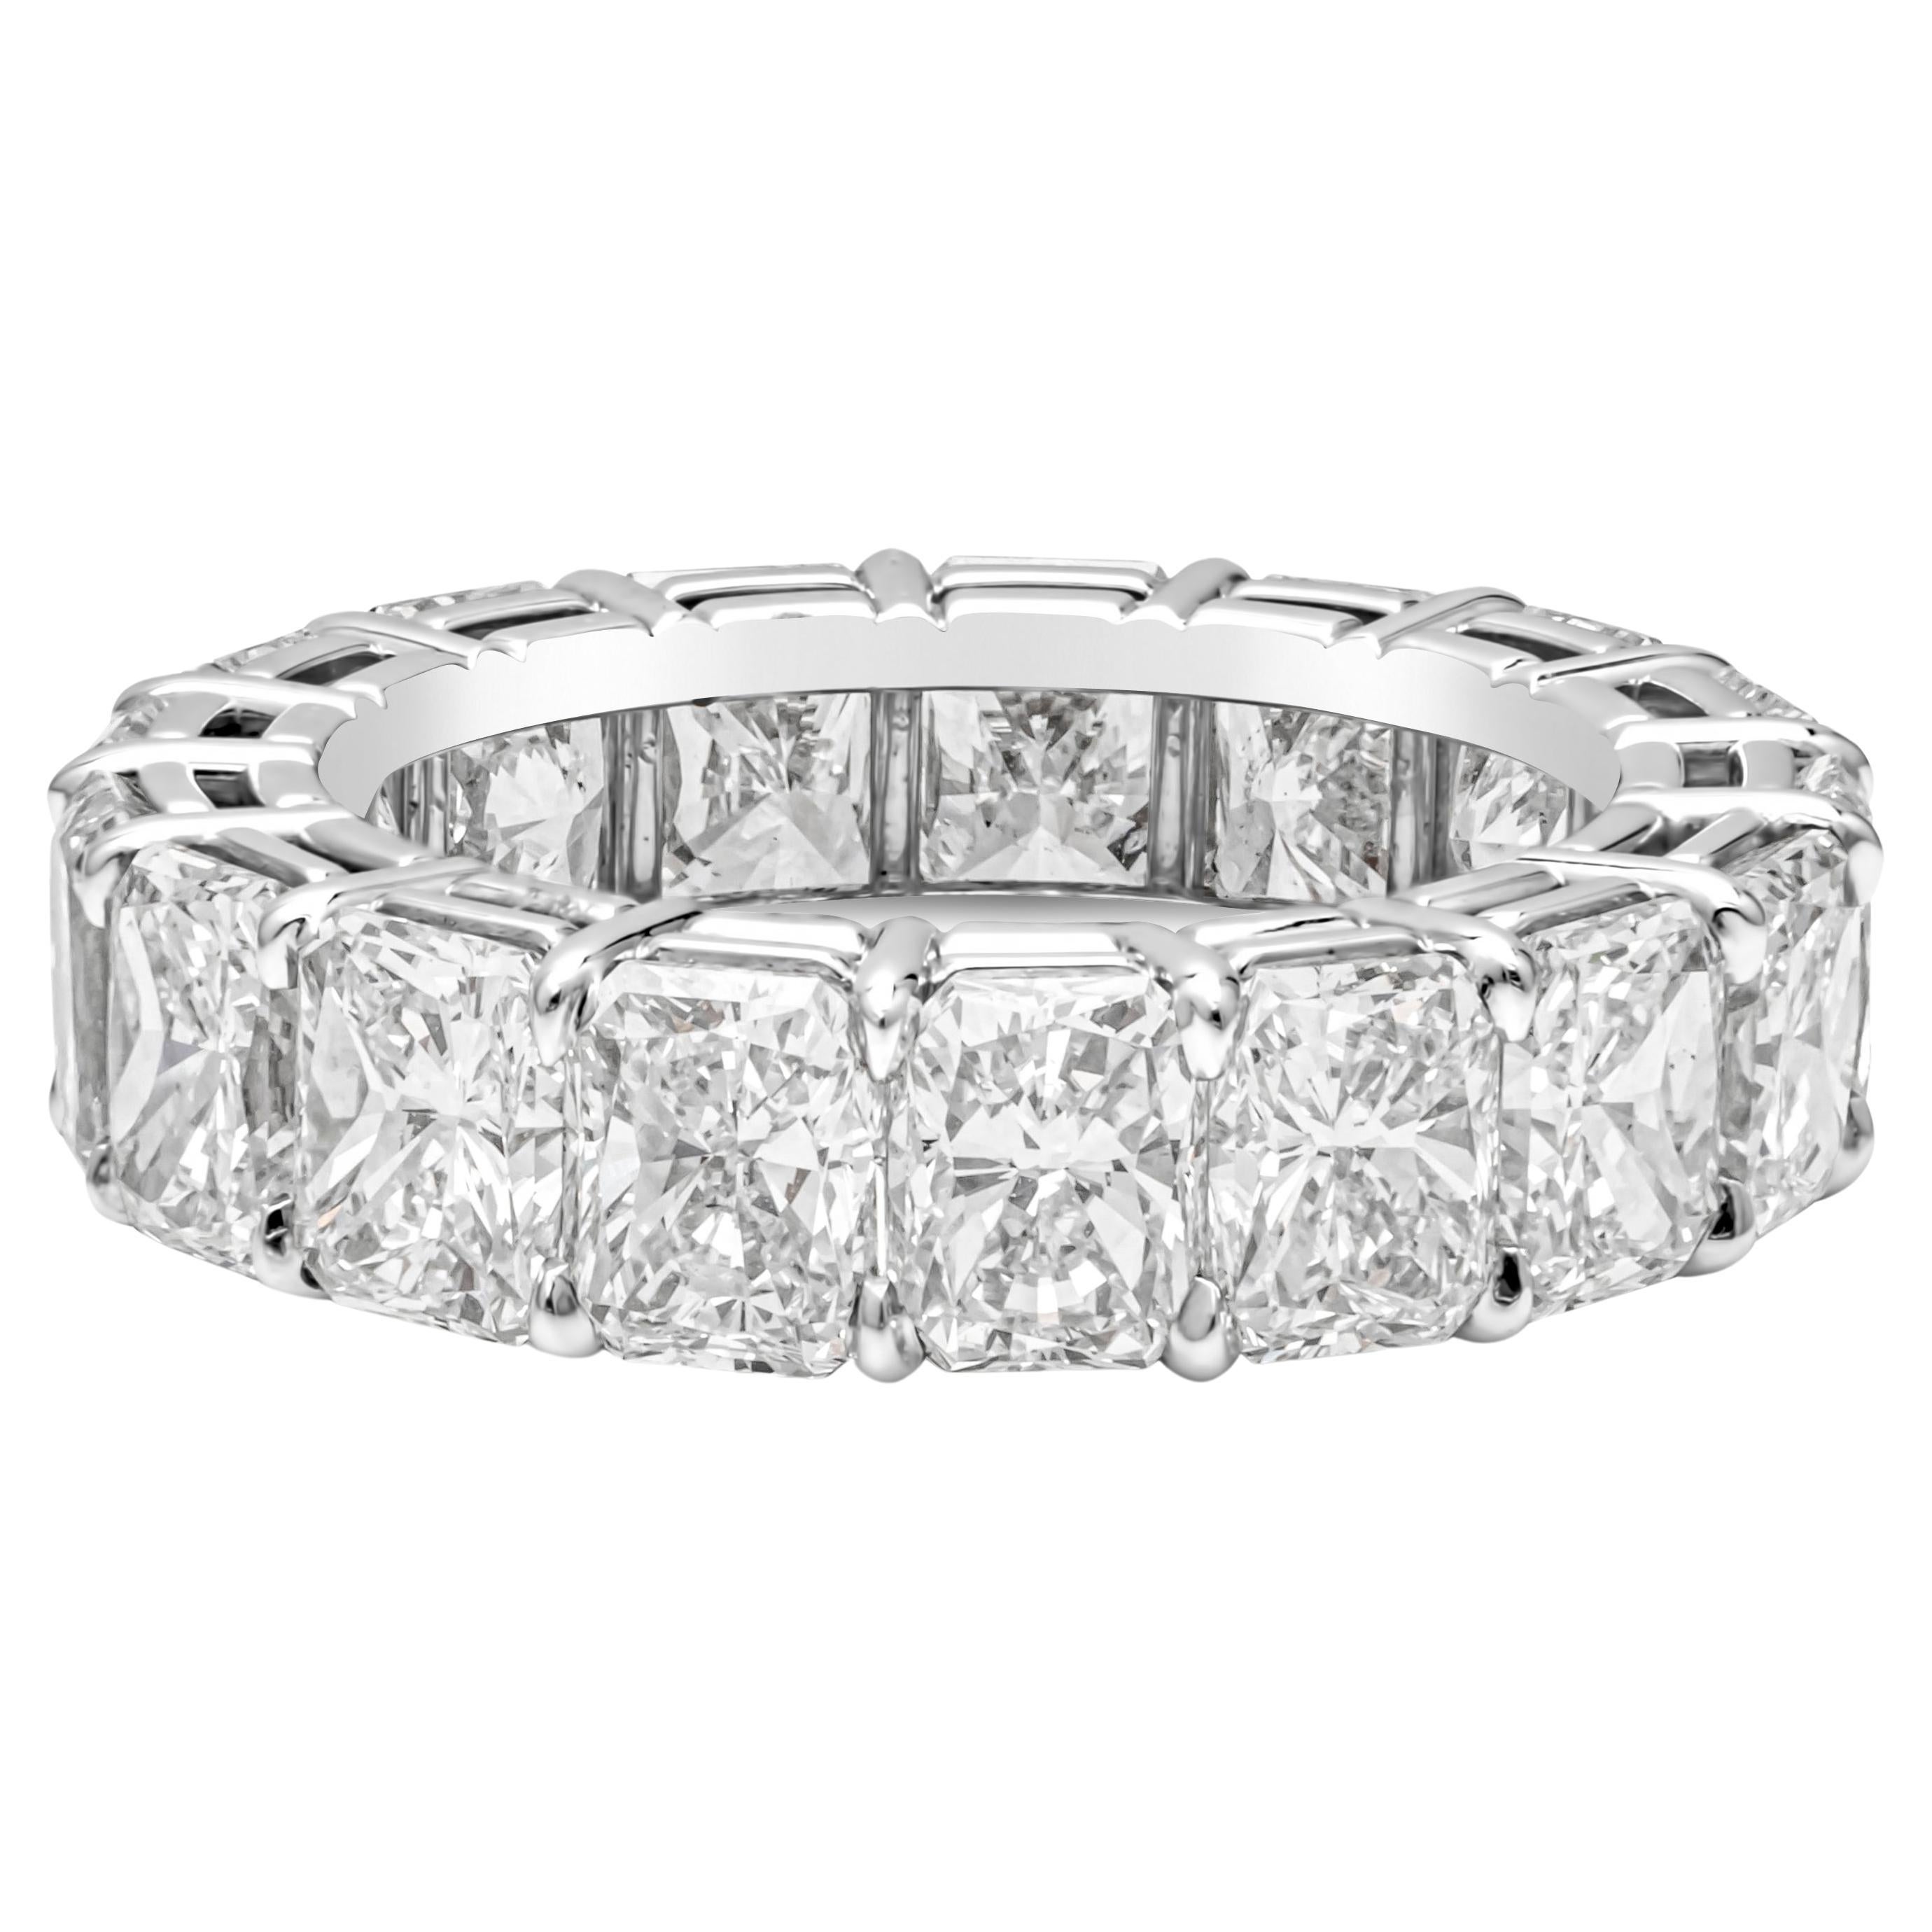 Roman Malakov 10.50 Carats Total Radiant Cut Diamond Eternity Wedding Band Ring For Sale